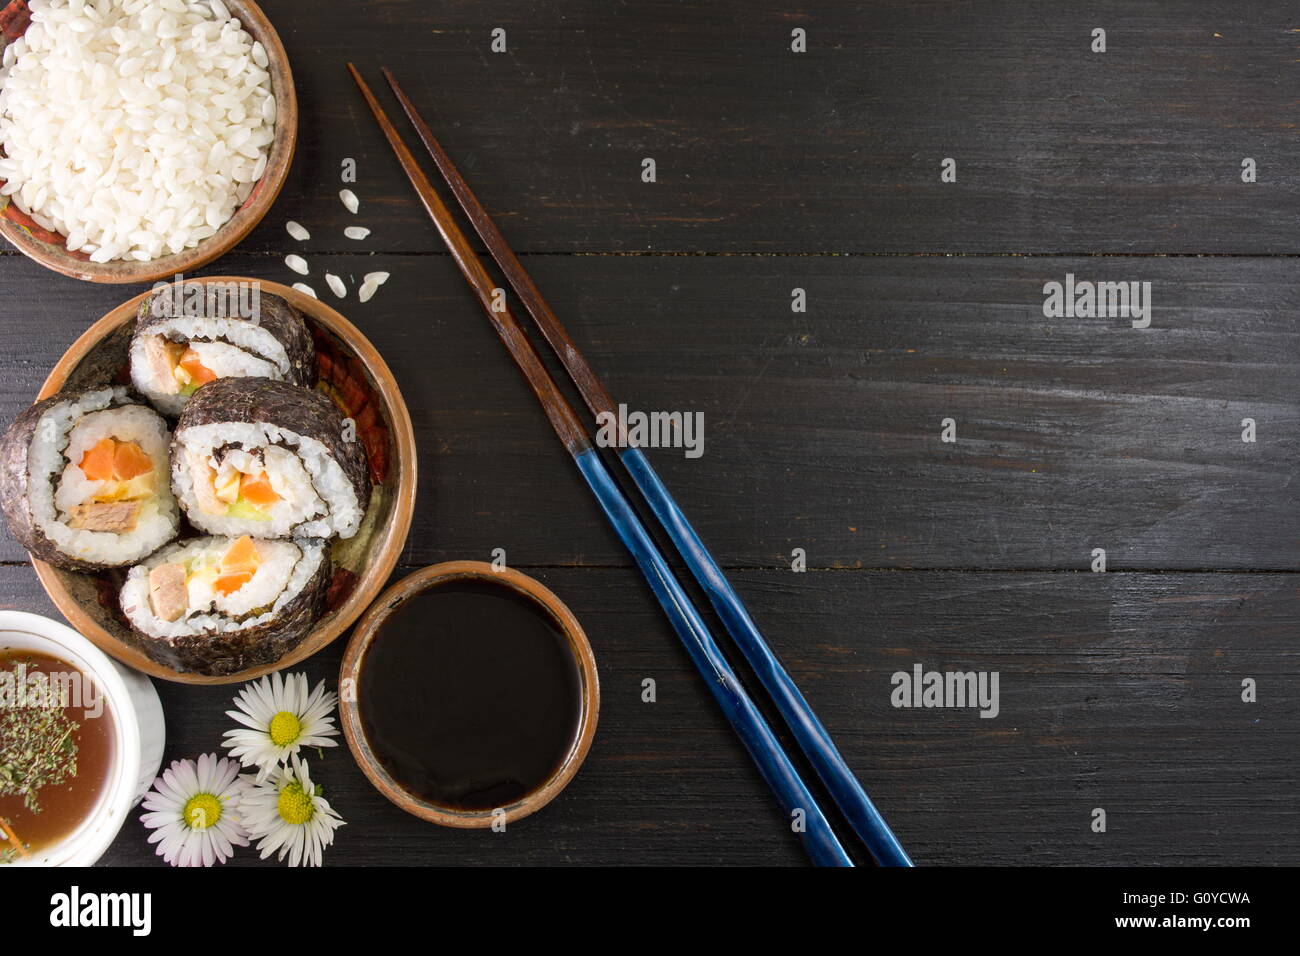 https://c8.alamy.com/comp/G0YCWA/sushi-rolls-and-chopsticks-with-sushi-ingredients-G0YCWA.jpg